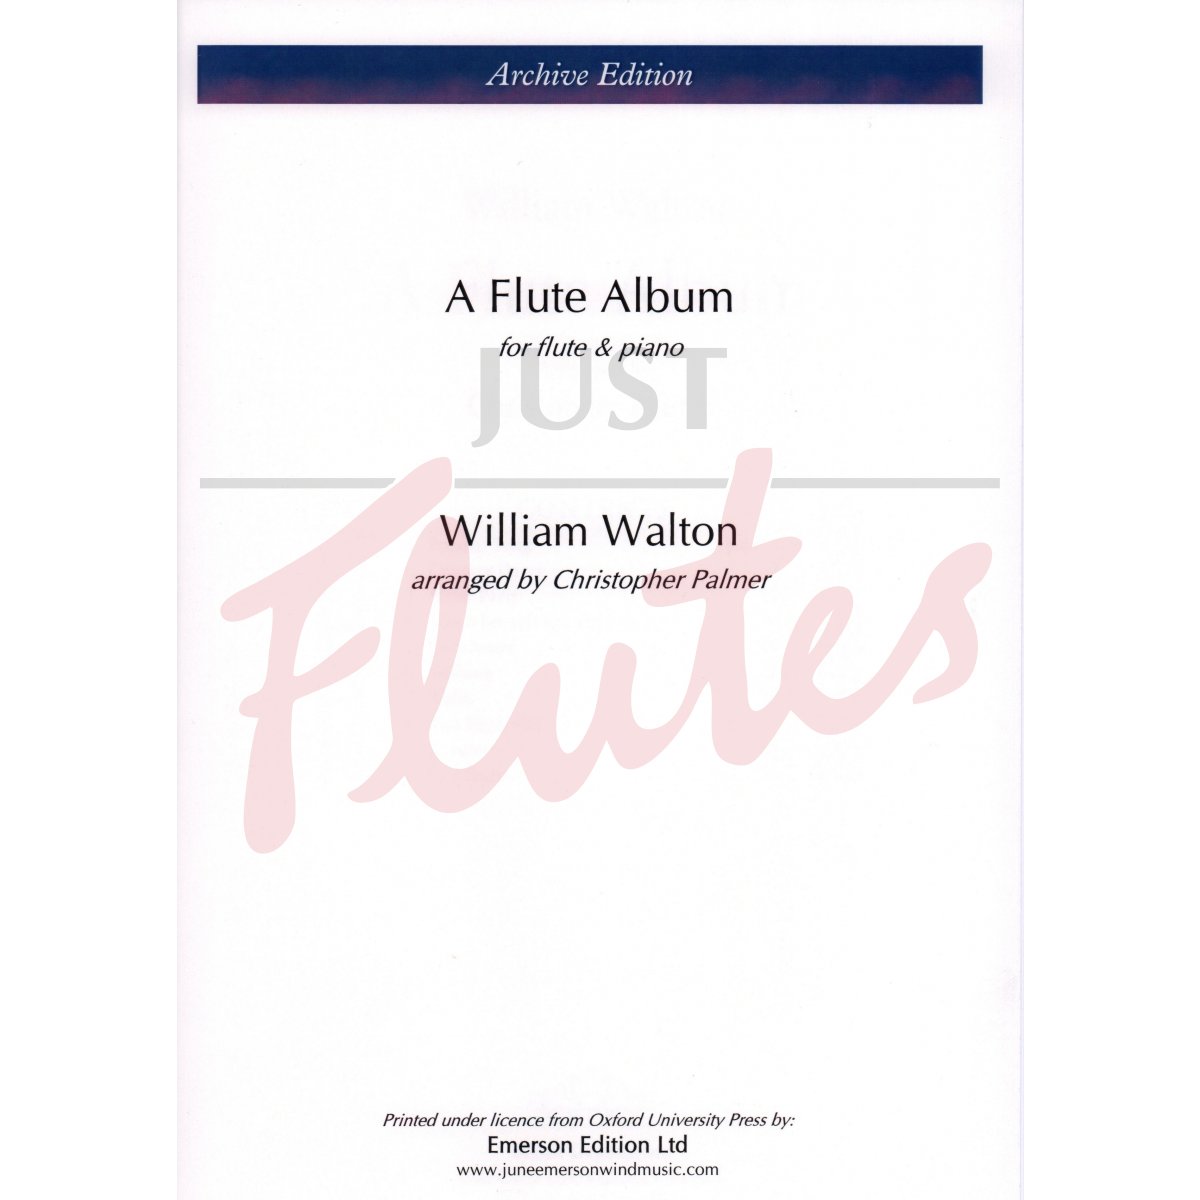 William Walton: A Flute Album for Flute and Piano